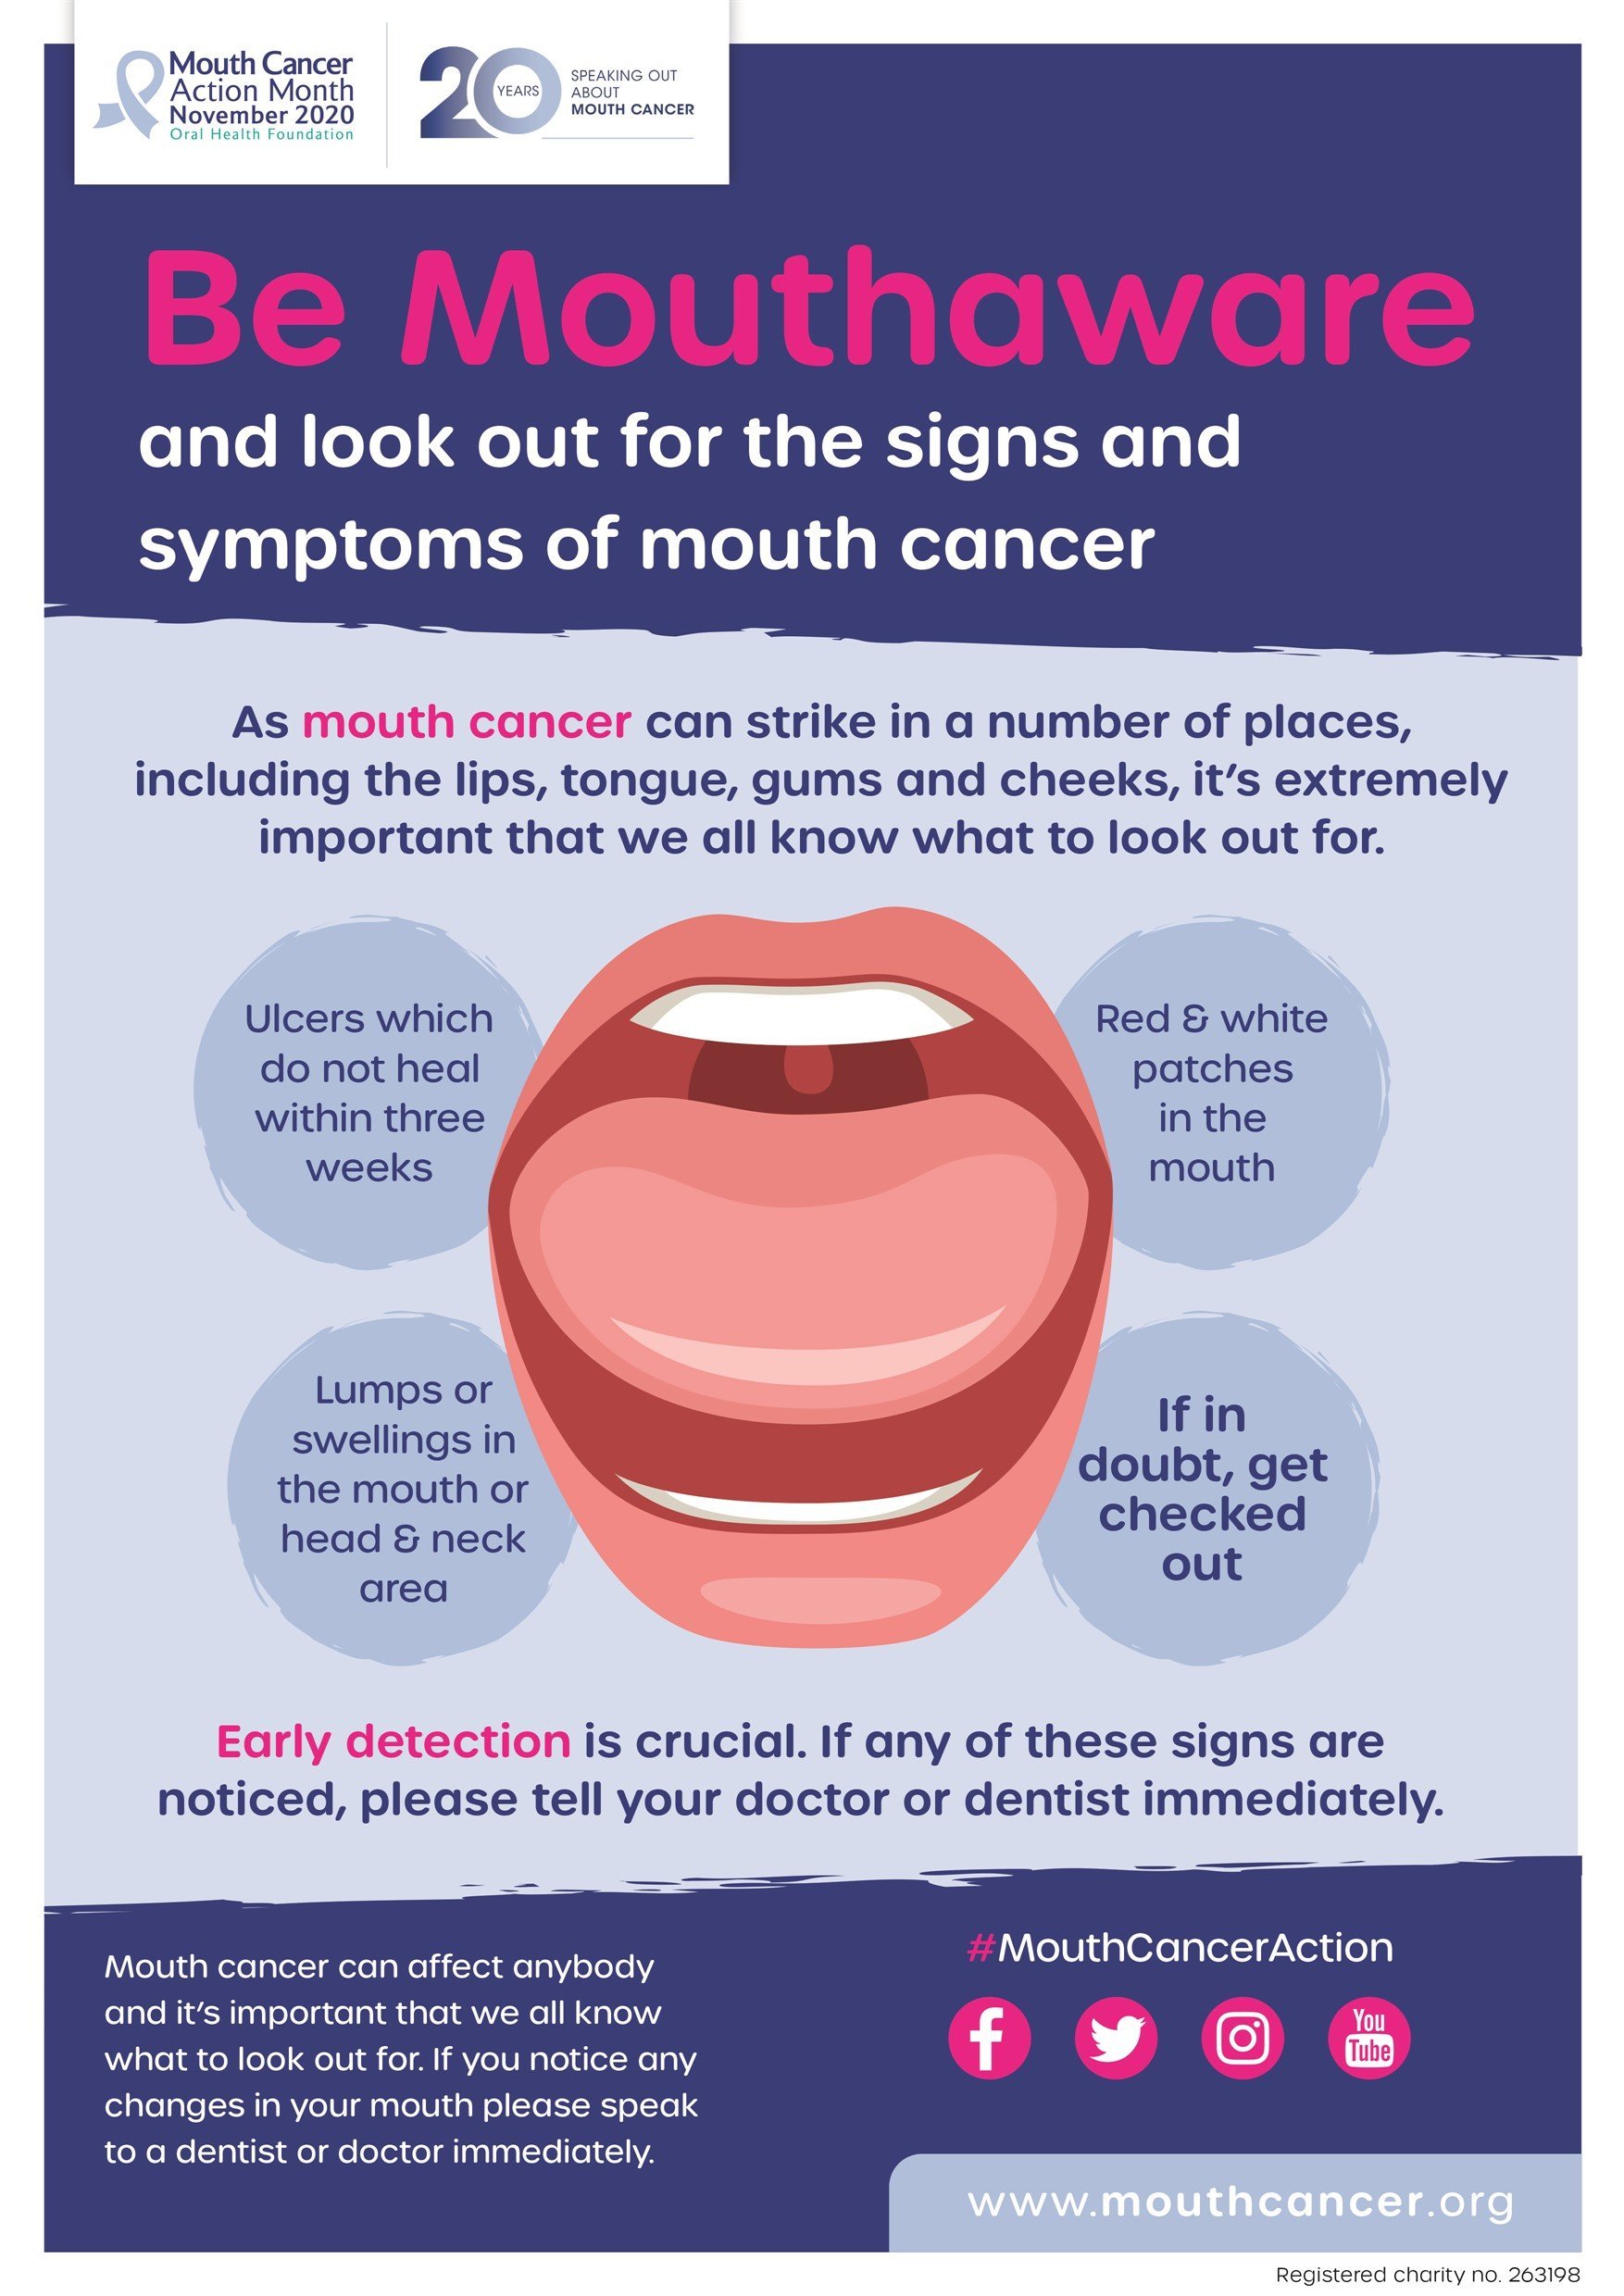 Mouth Cancer Symptoms The Vallance Dental Centre